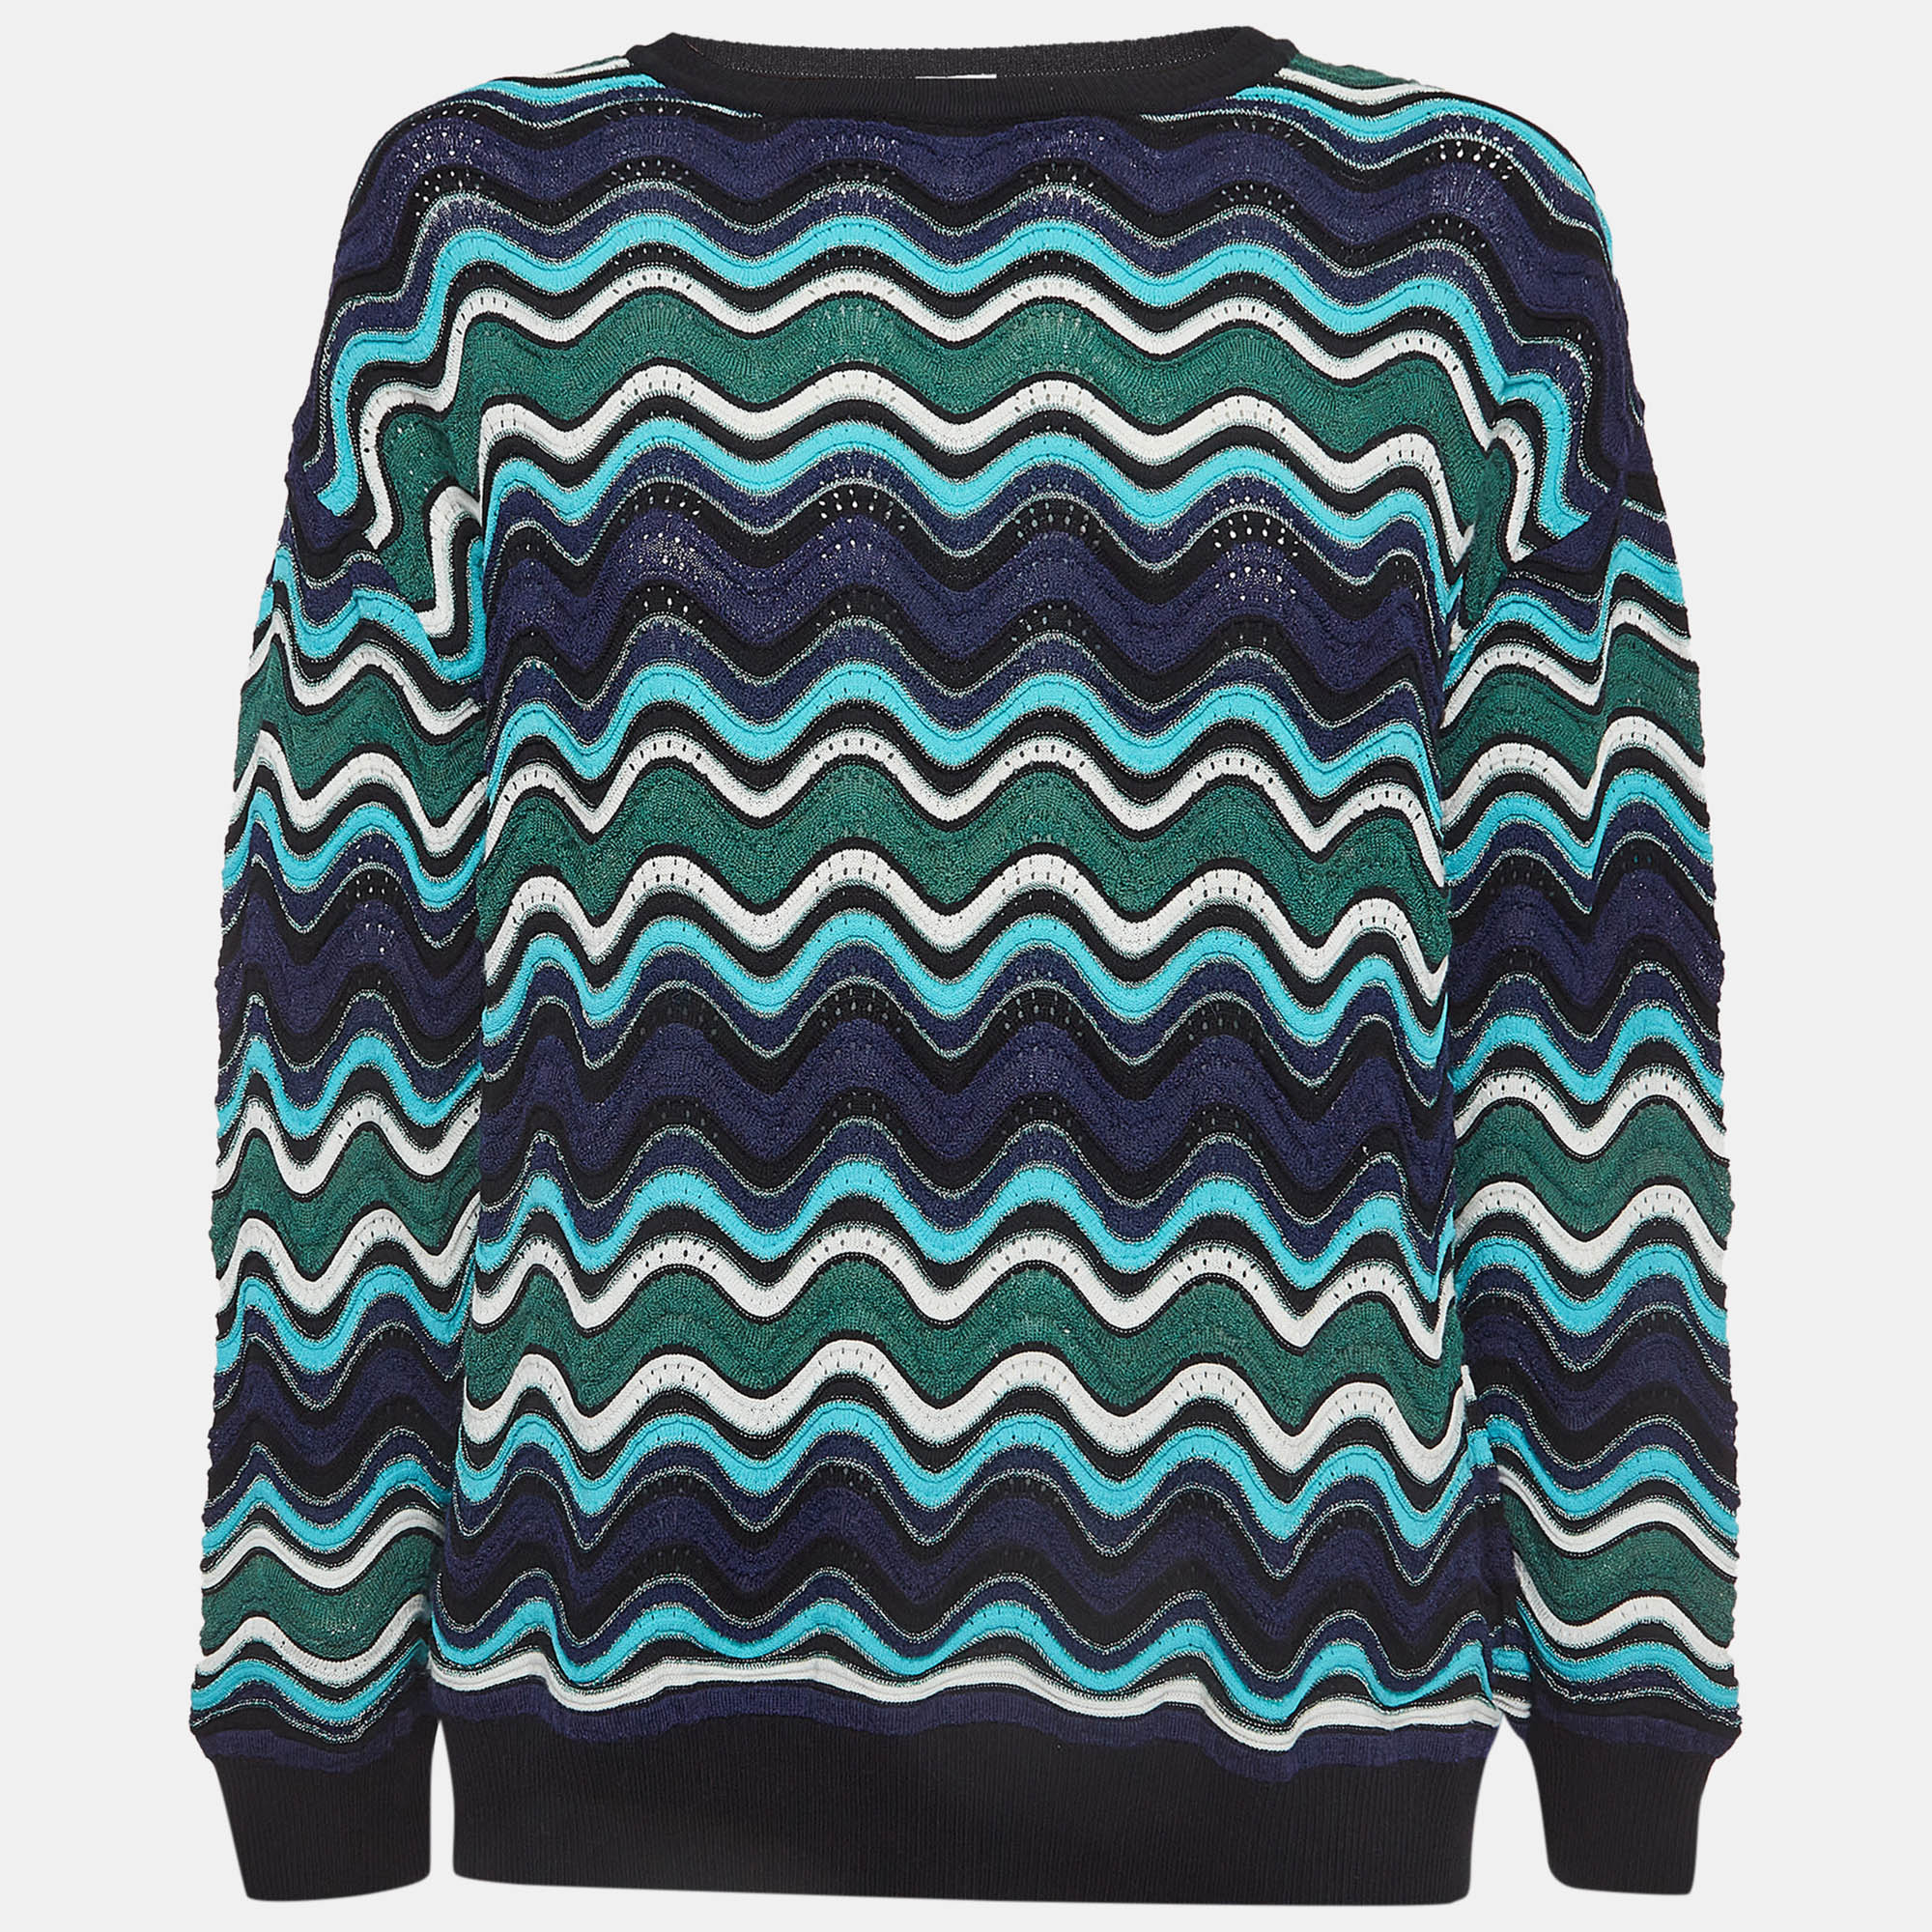 

M Missoni Multicolor Chevron Patterned Knit Sweater M